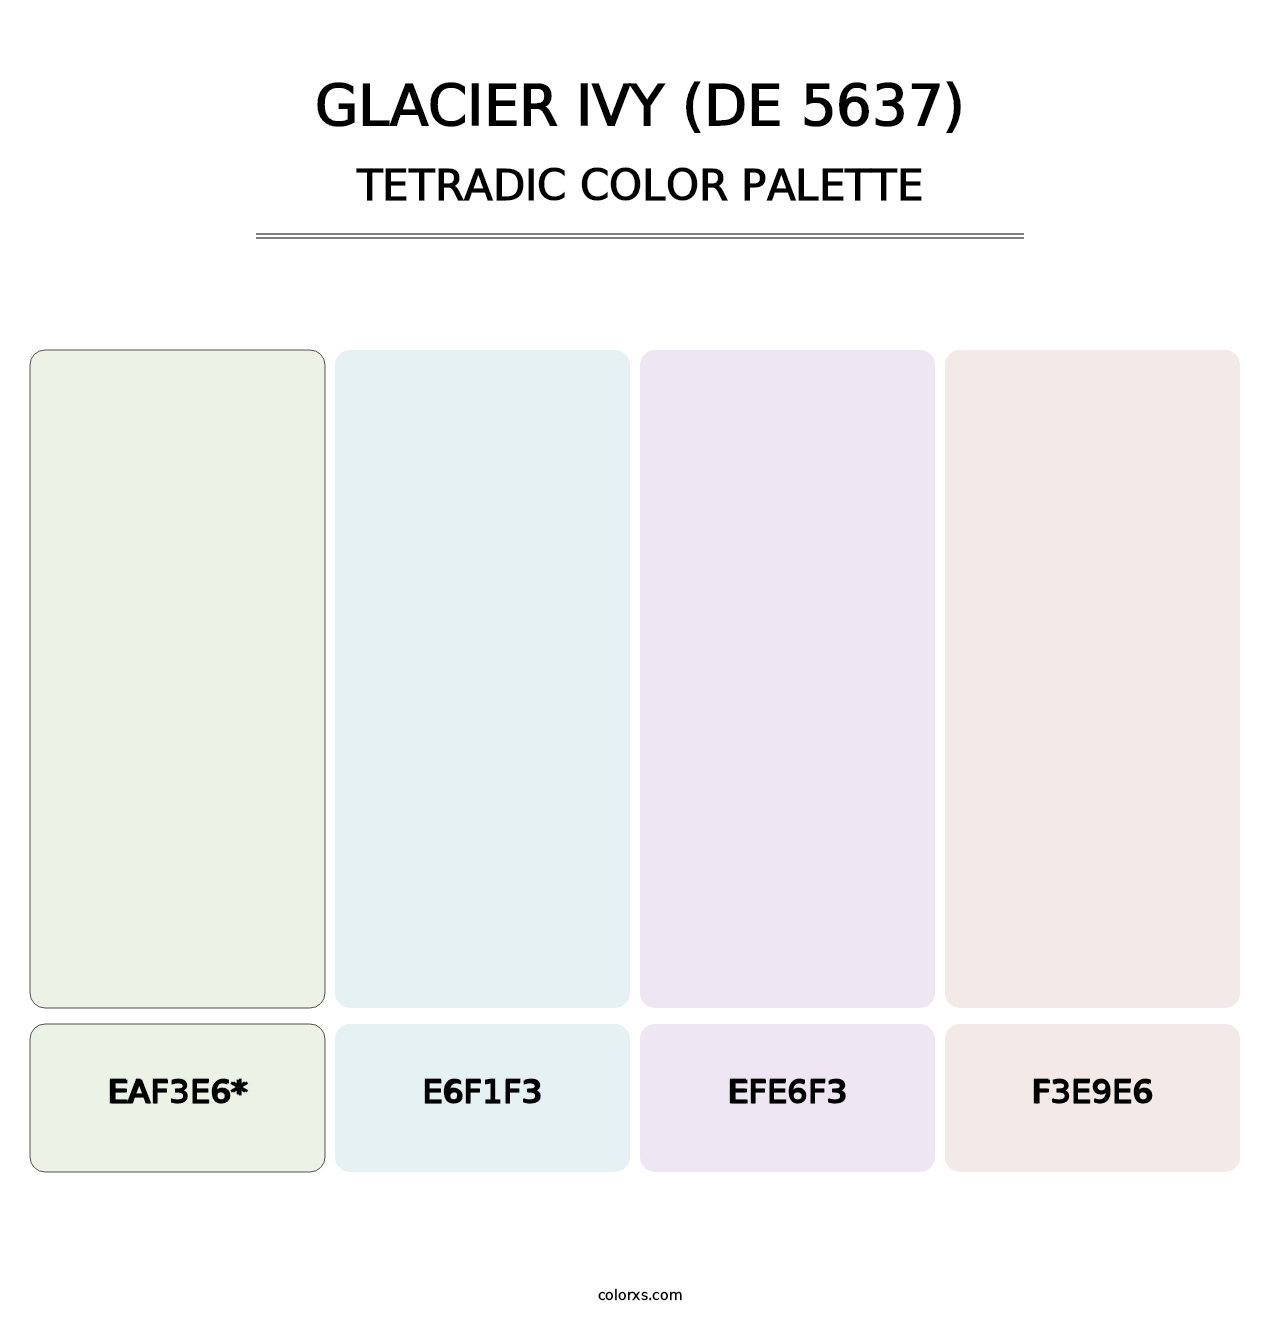 Glacier Ivy (DE 5637) - Tetradic Color Palette